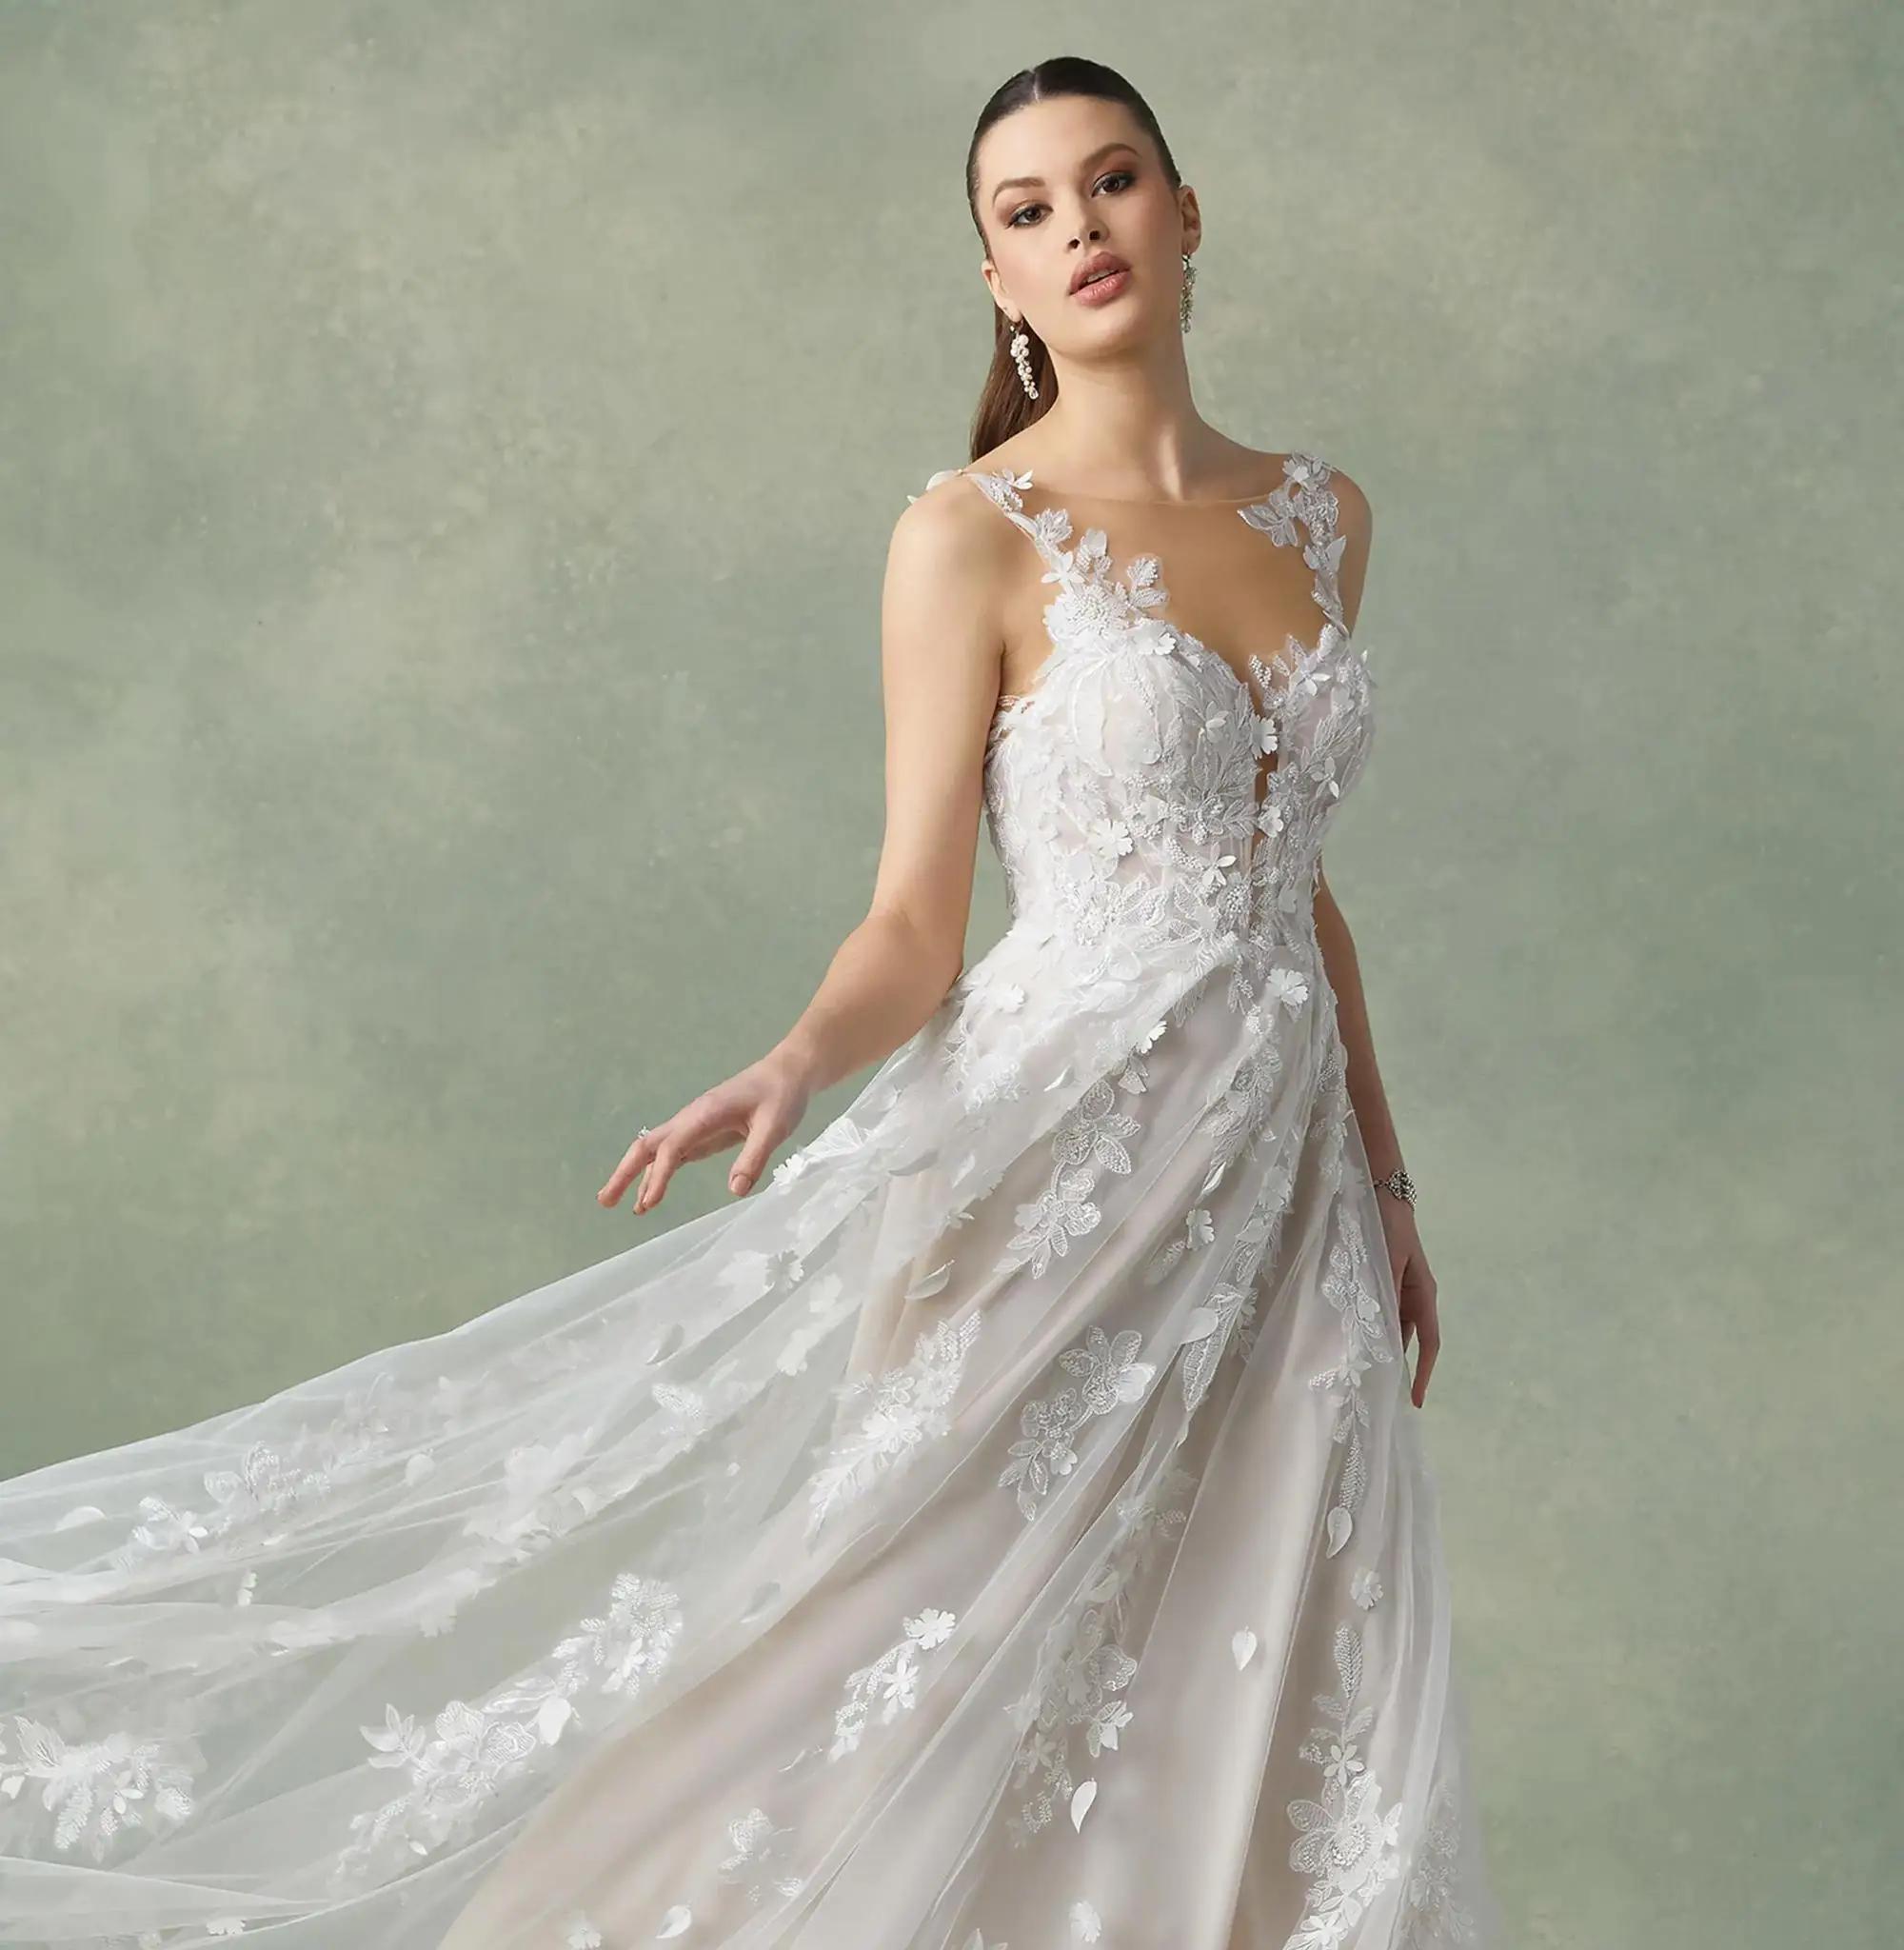 Stunning Beaded Bridal Dresses Image